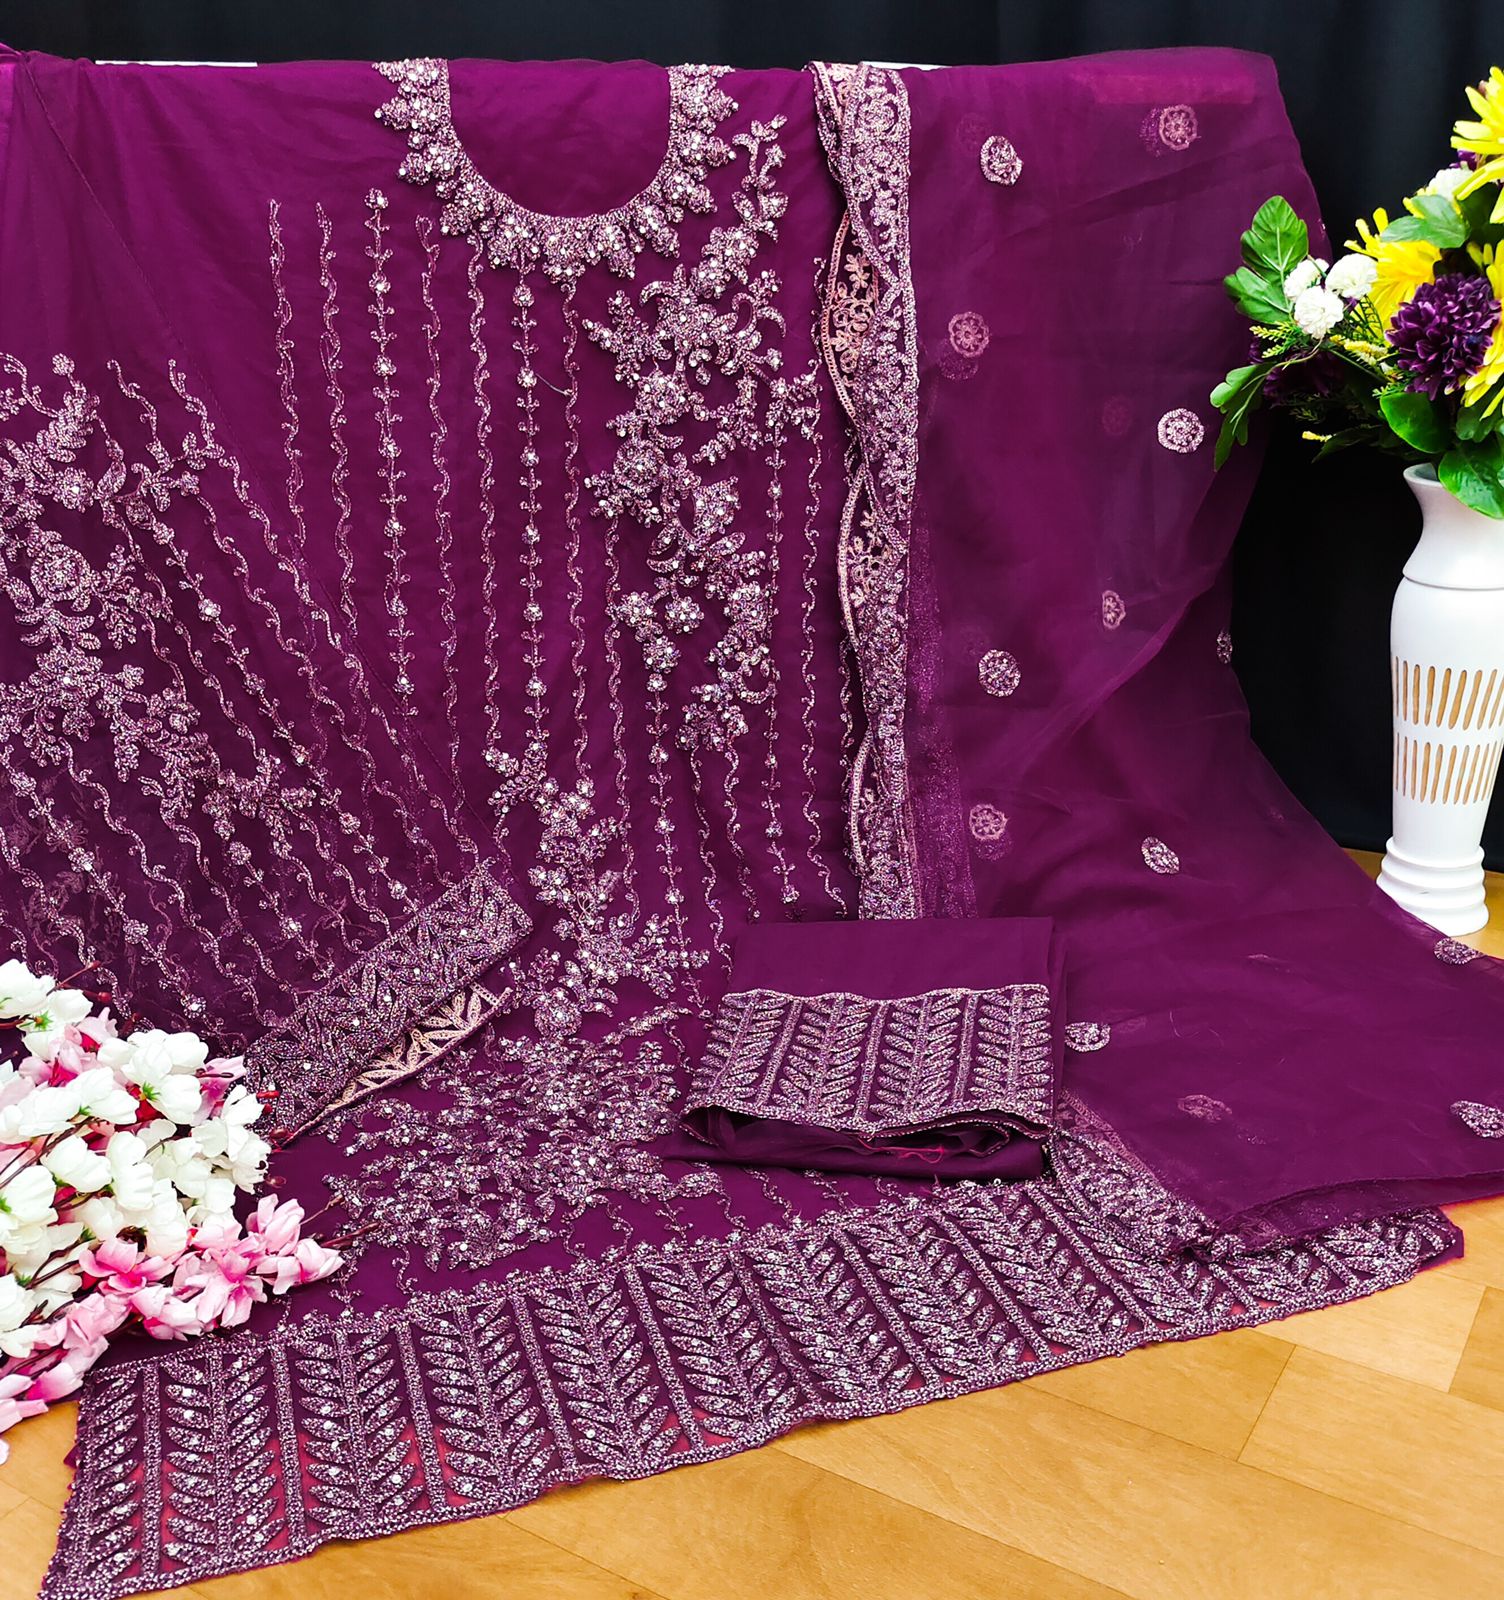 Swagat Swati 3306 Colors Kaleesha Fashion Semi Stitched Suits Manufacturer Wholesaler